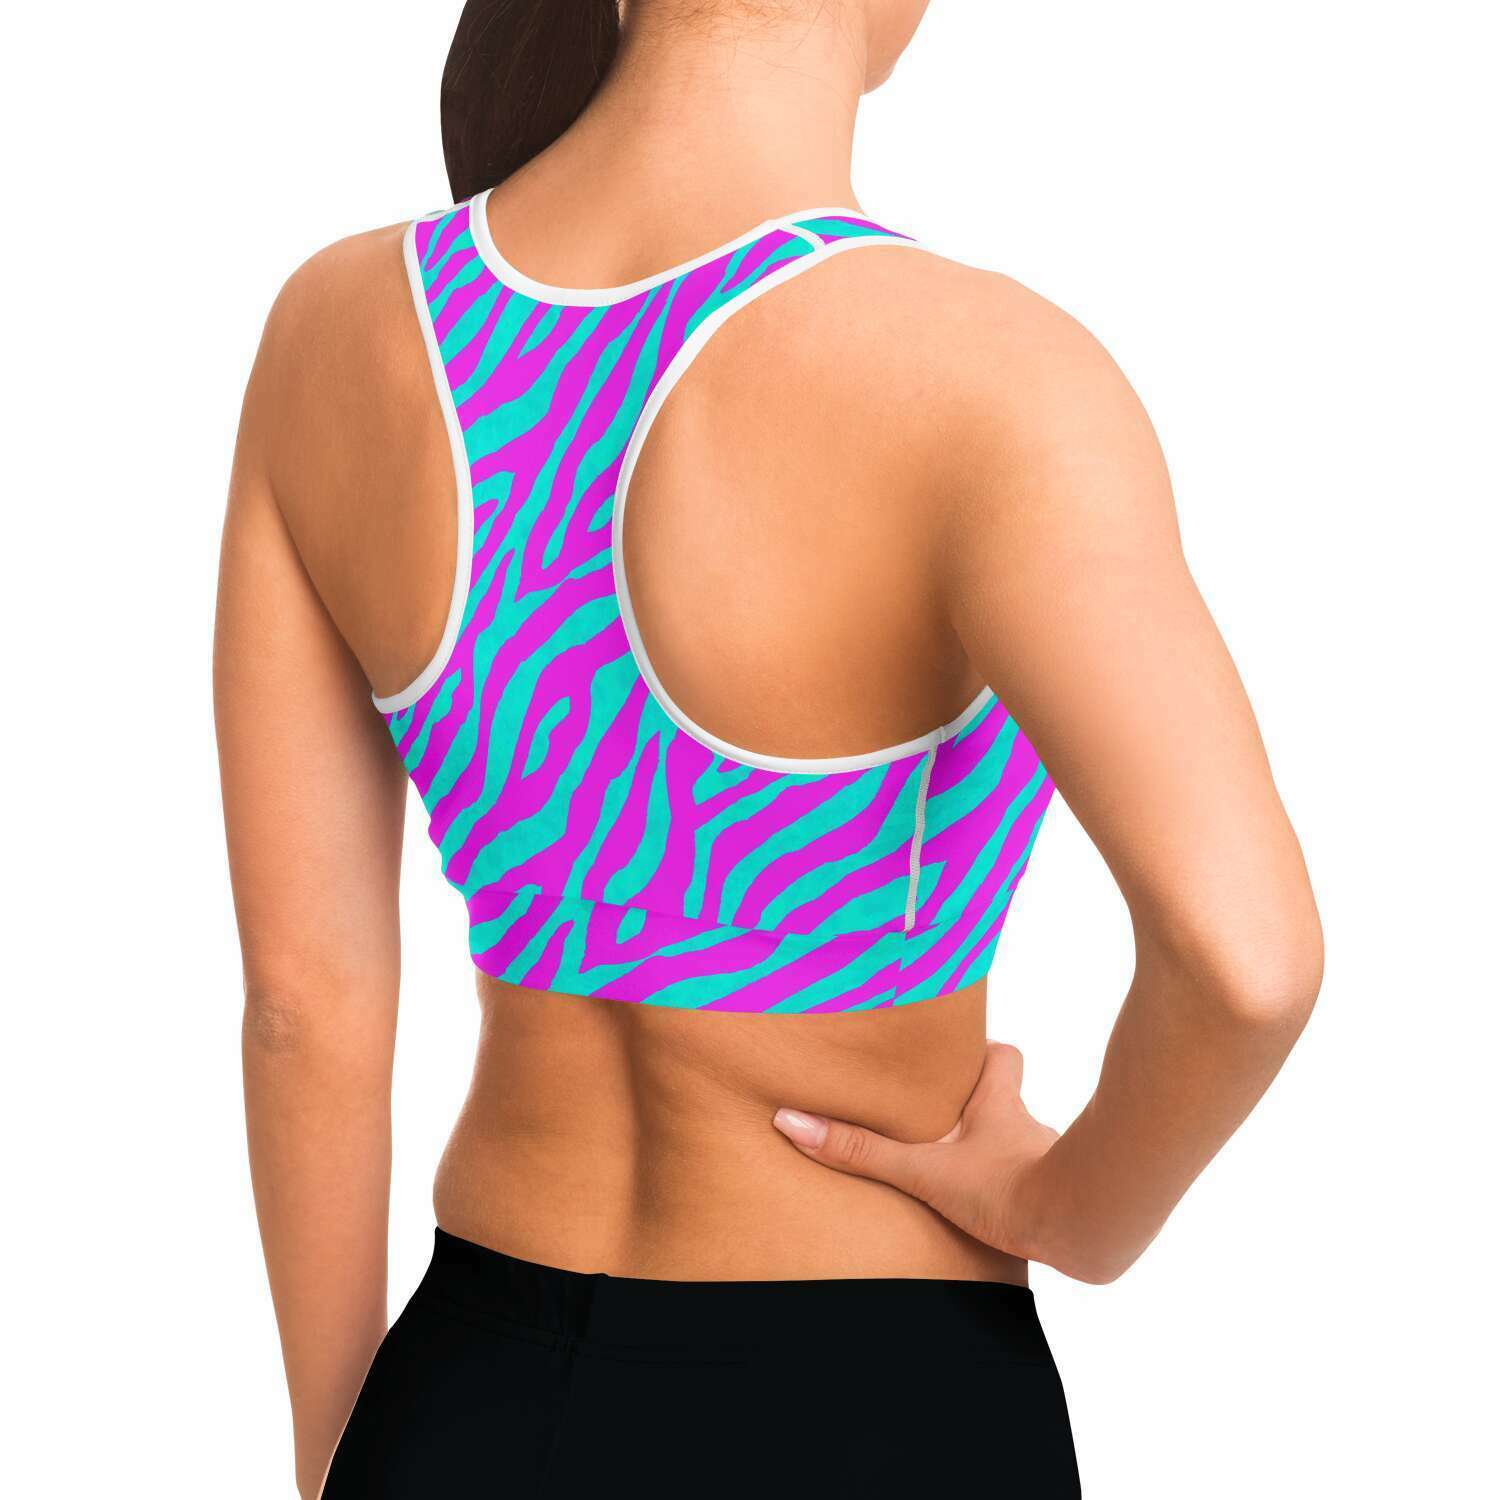 Women's Hot Pink Zebra Animal Print Athletic Bra Model Right